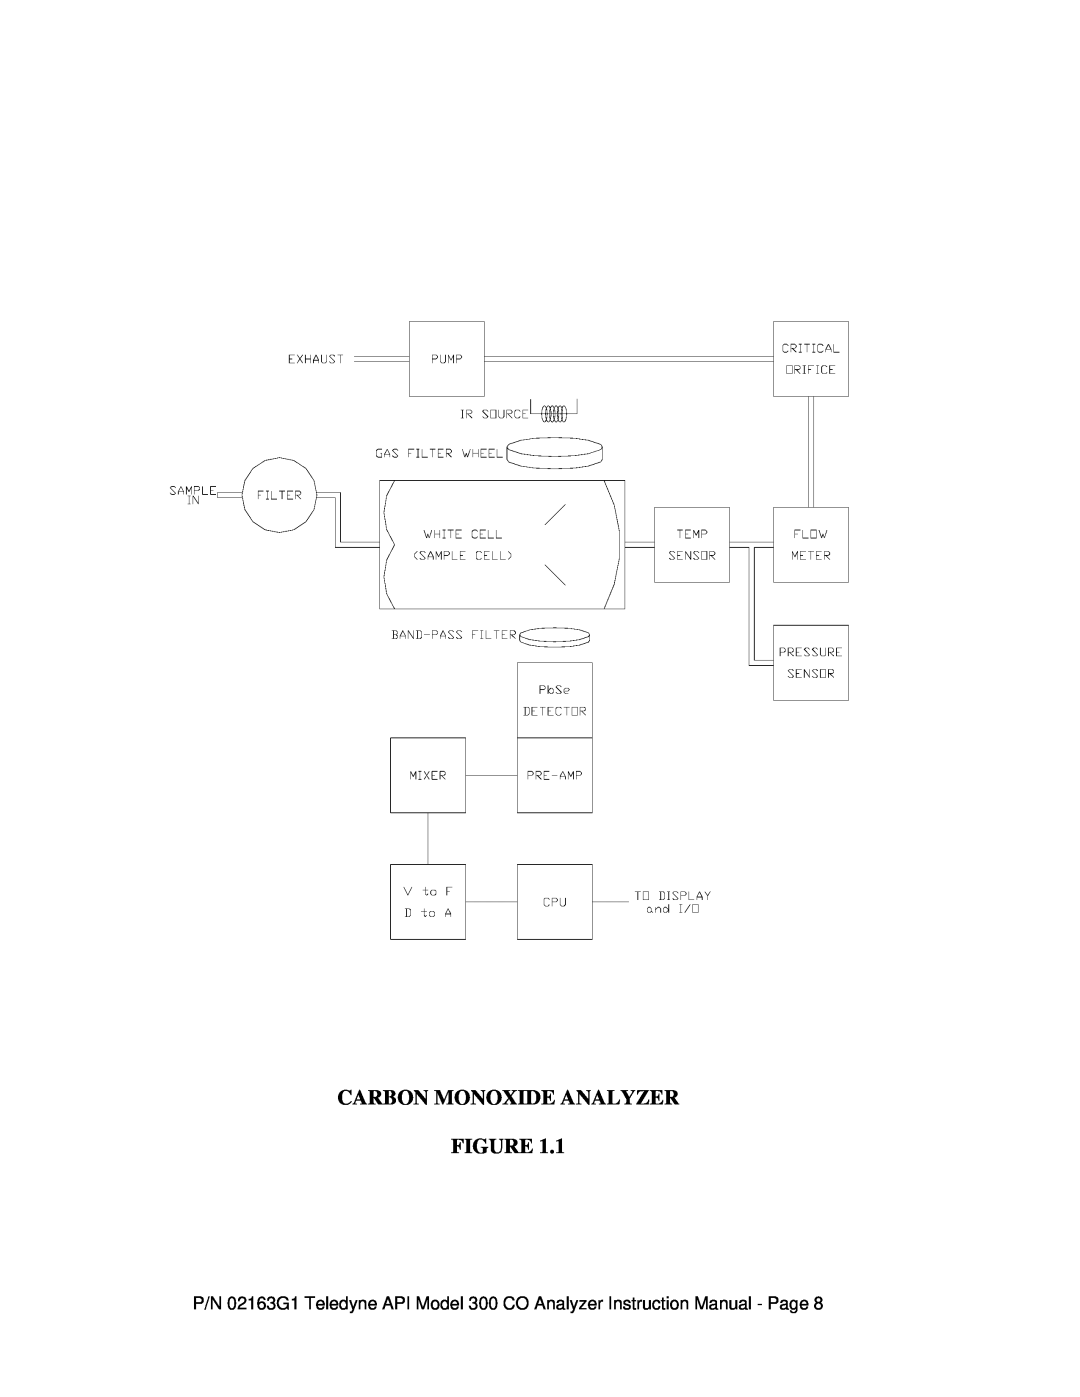 Teledyne 300 instruction manual Carbon Monoxide Analyzer Figure 